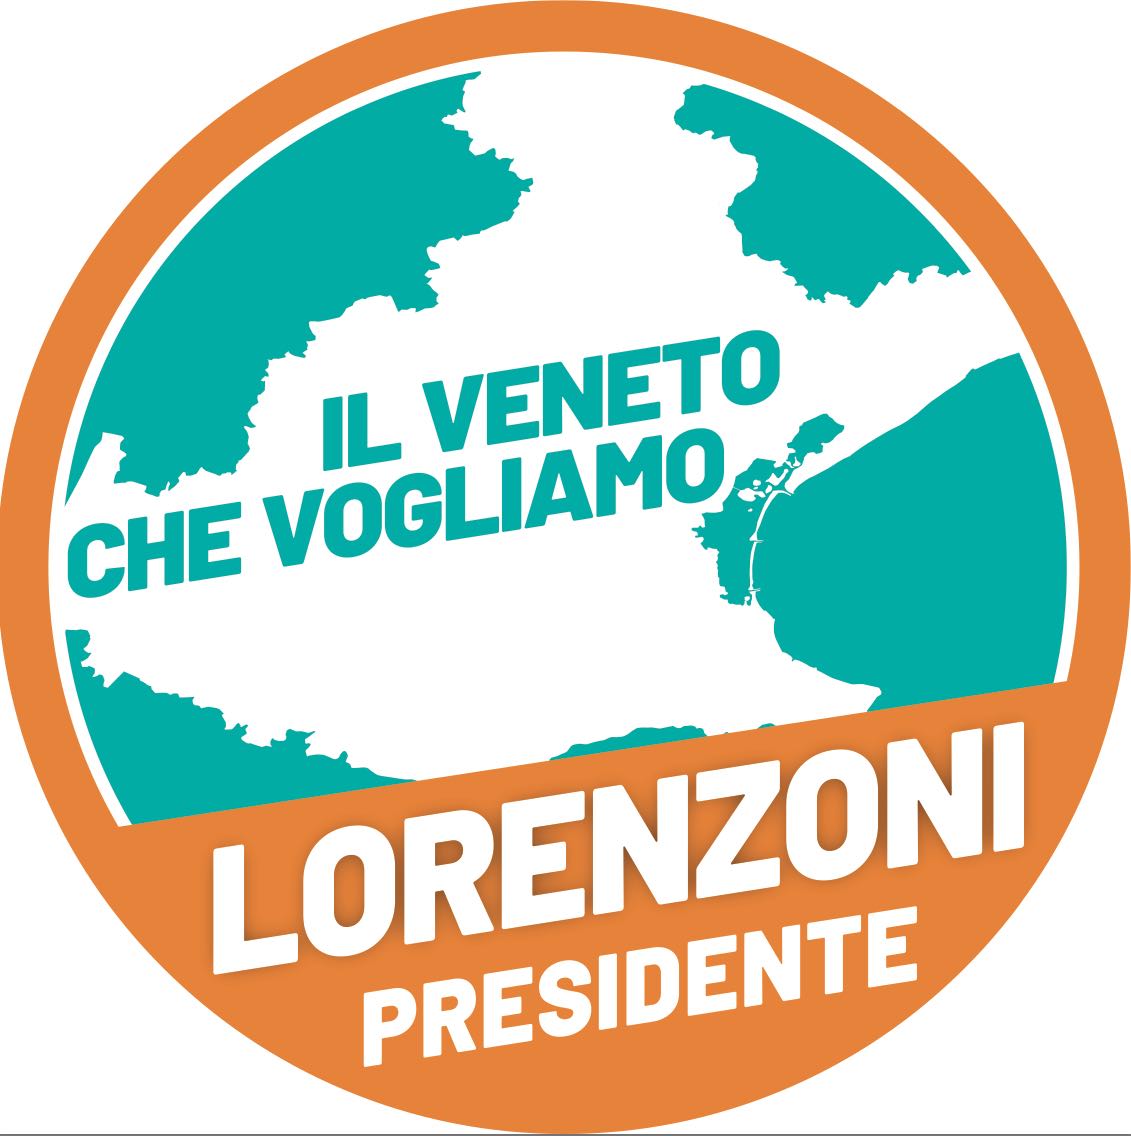 Veneto_che_vogliamo_logo.jpg